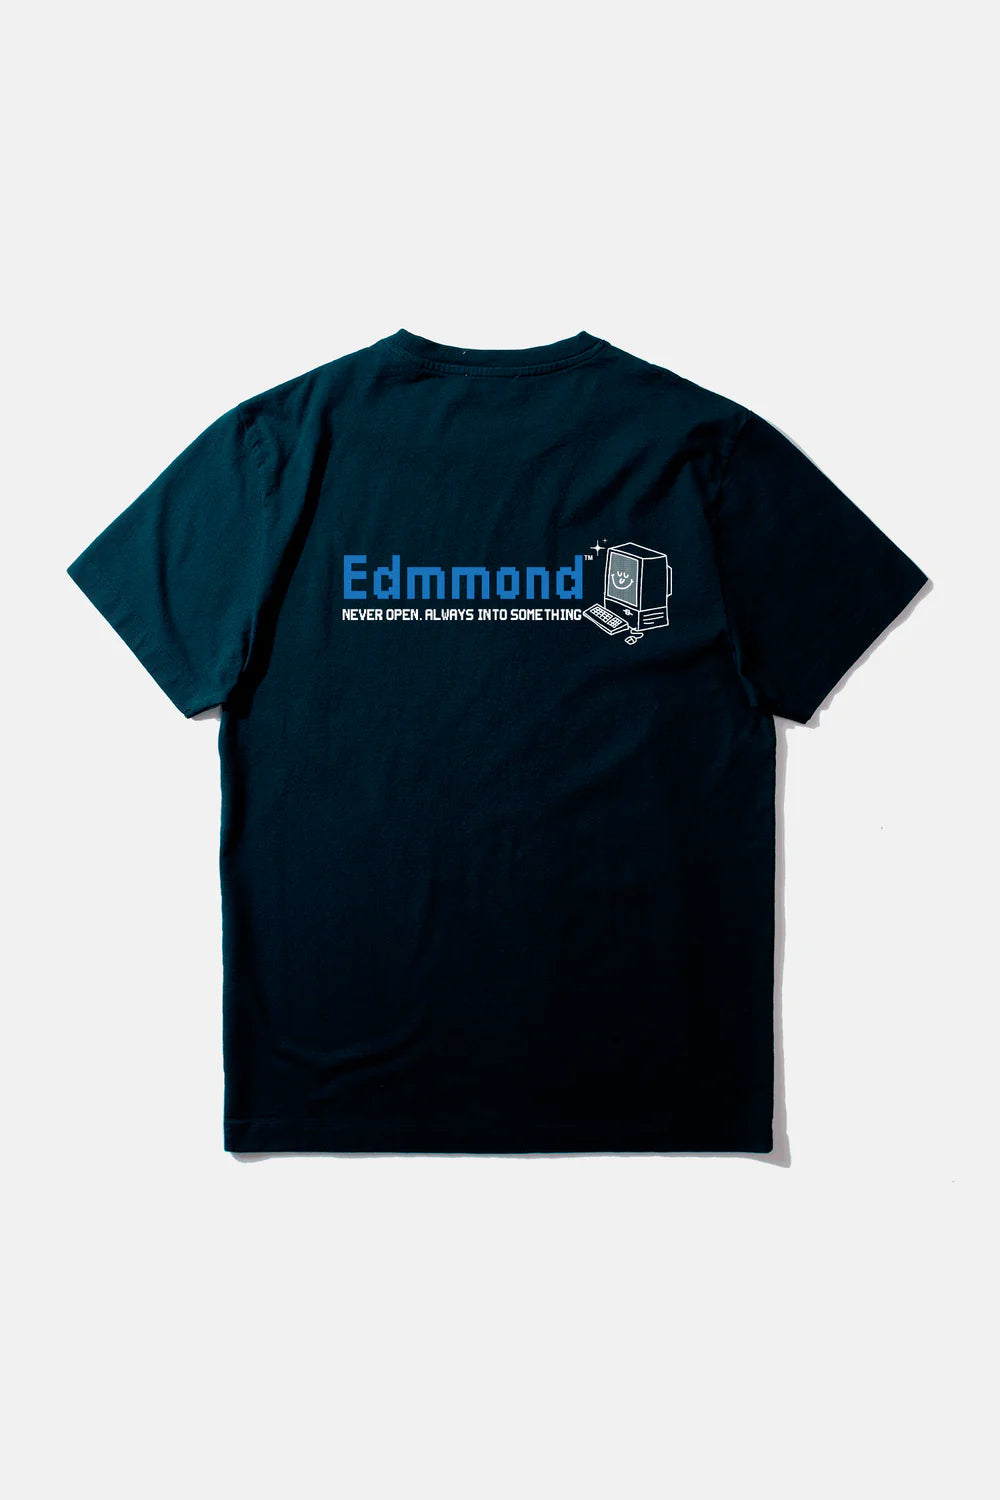 Edmmond Studios Log Off Navy T-Shirt